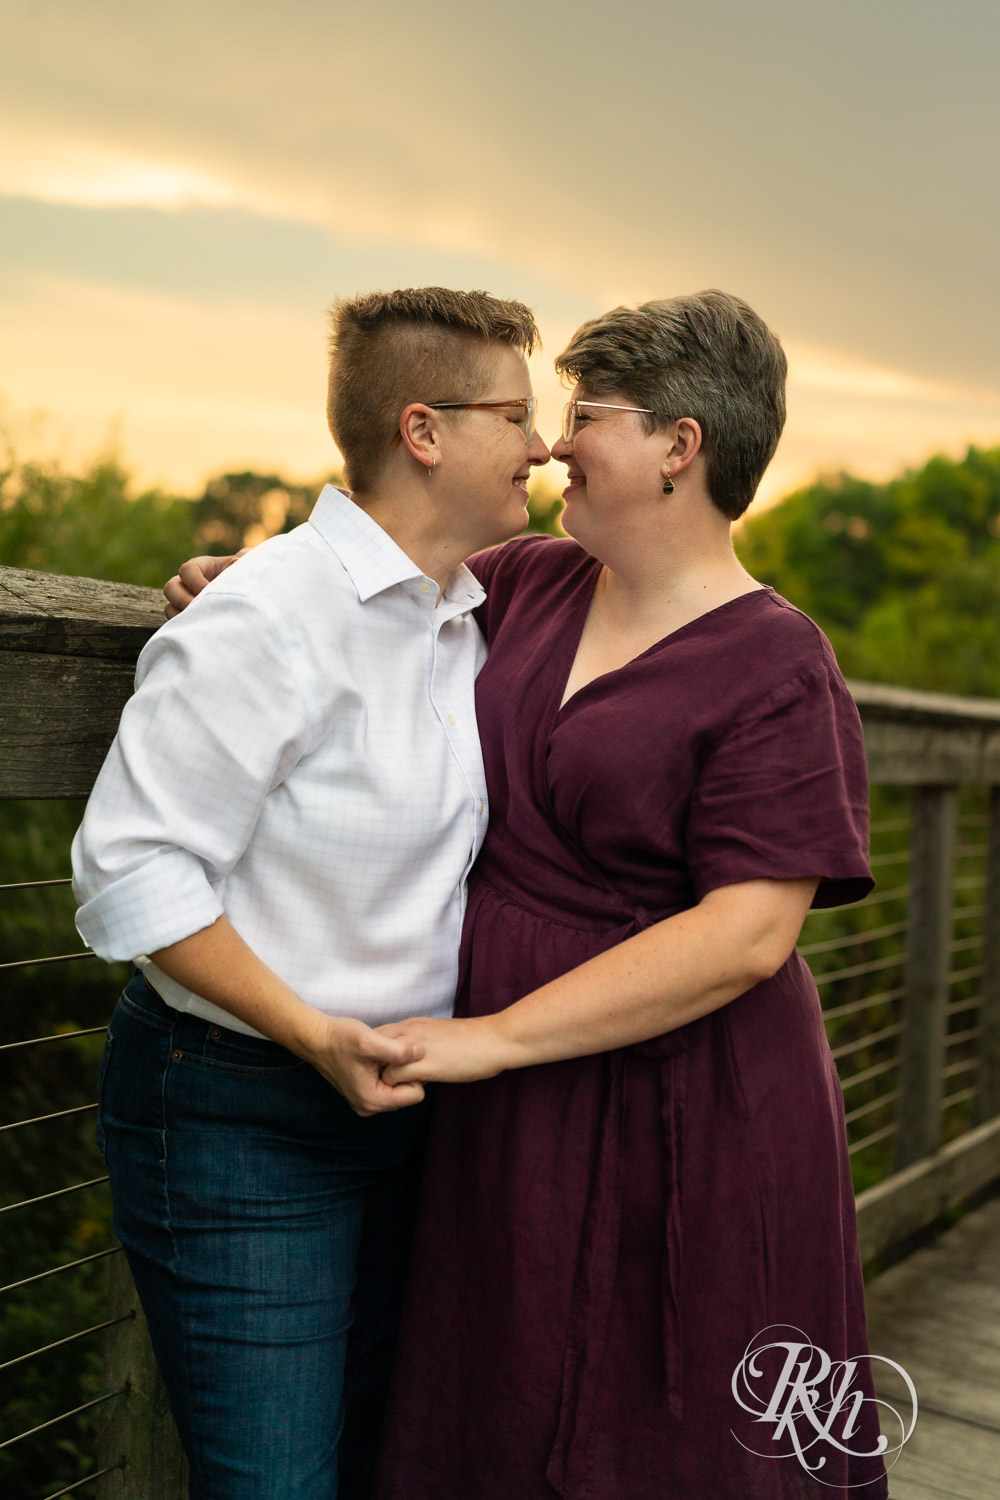 Lesbian couple kiss on bridge during sunset engagement photos at Lebanon Hills Regional Park in Eagan, Minnesota.